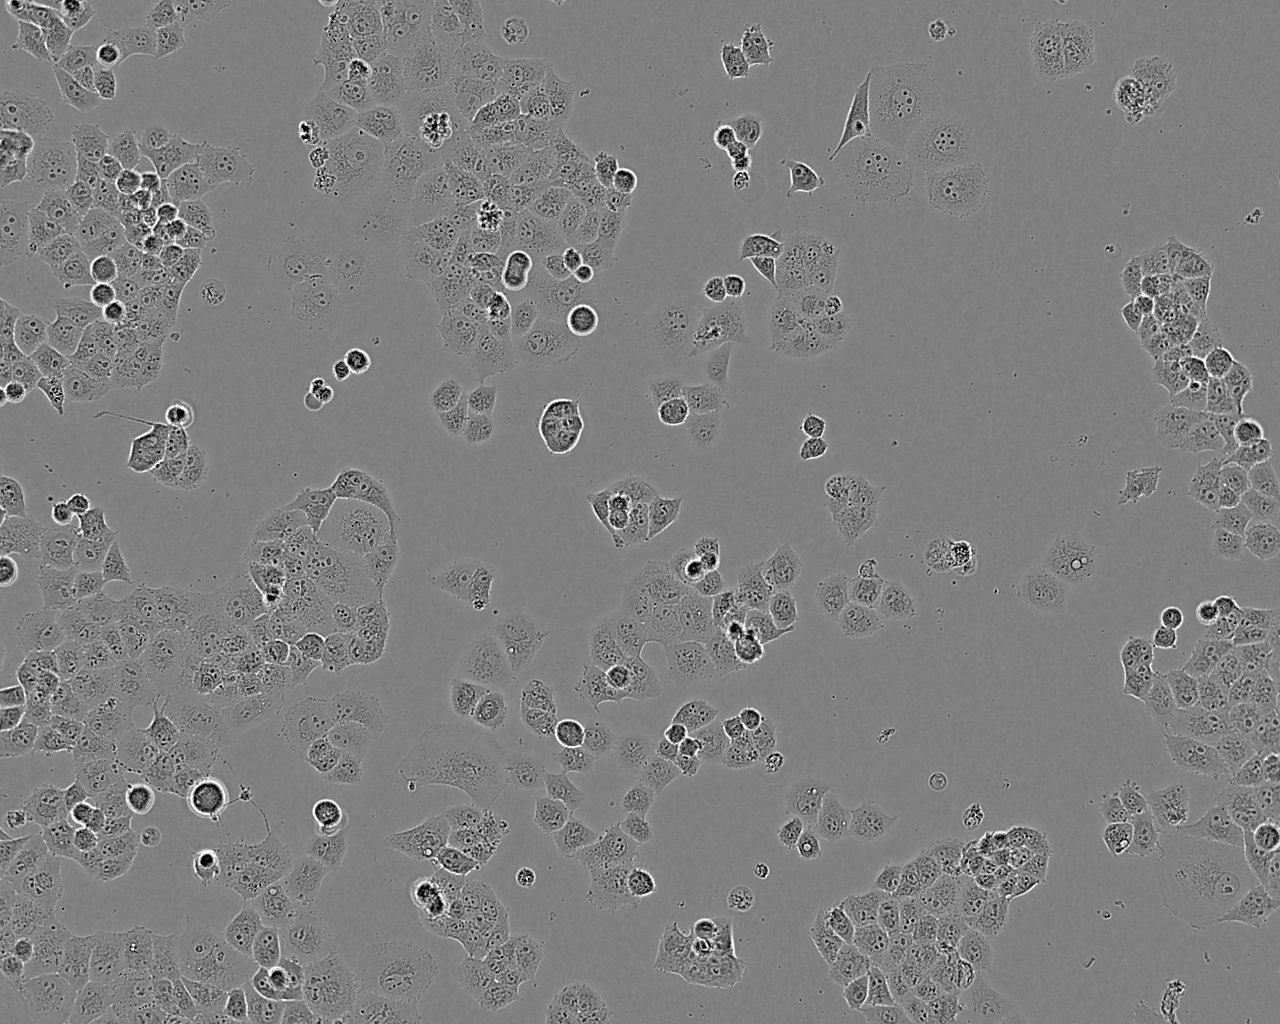 NCI-H1618 Cell|人小细胞肺癌细胞,NCI-H1618 Cell